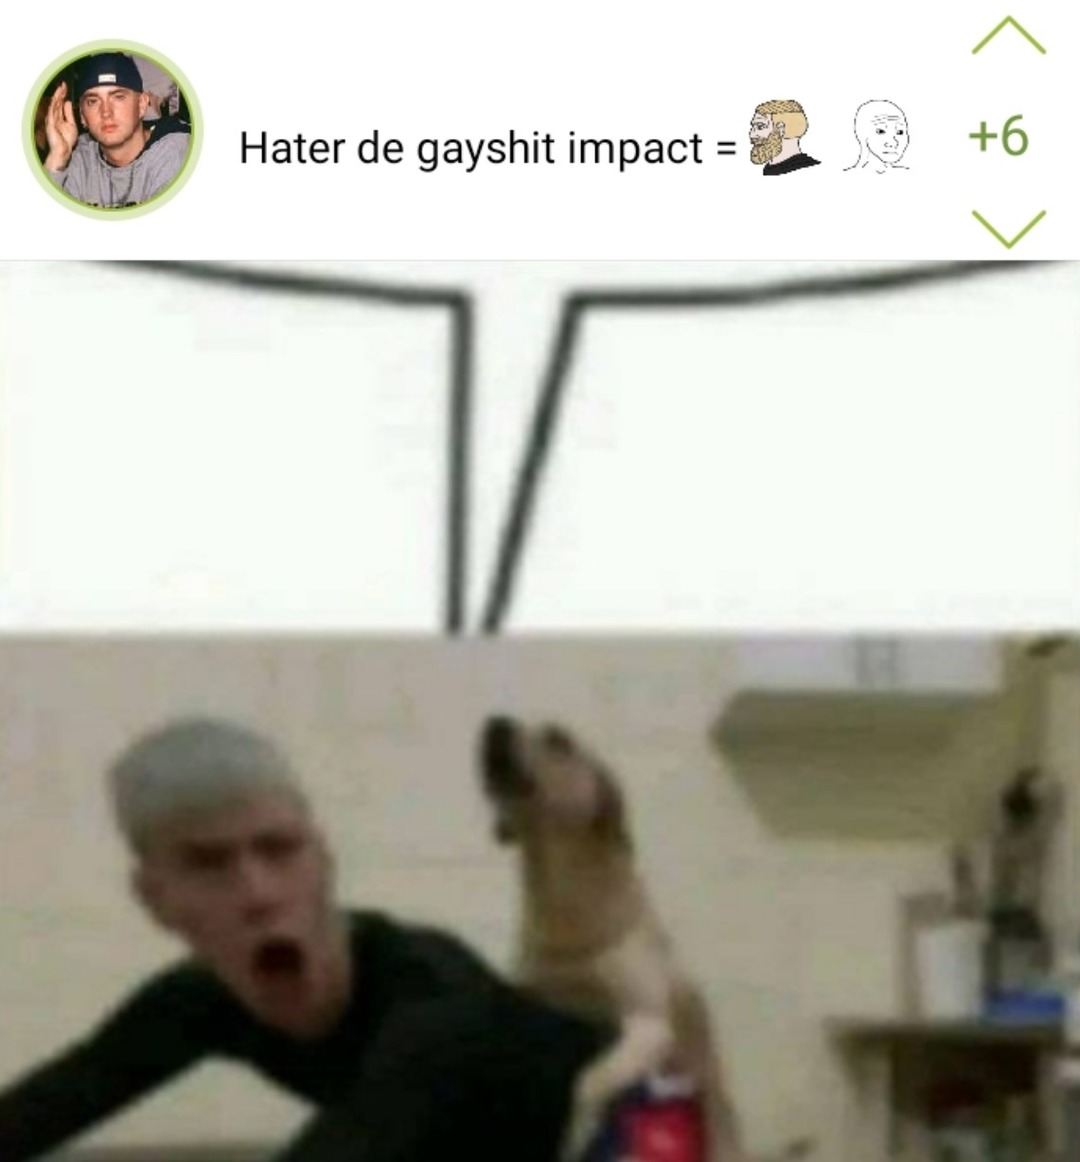 Gayshit impacto es de coñooooo - meme